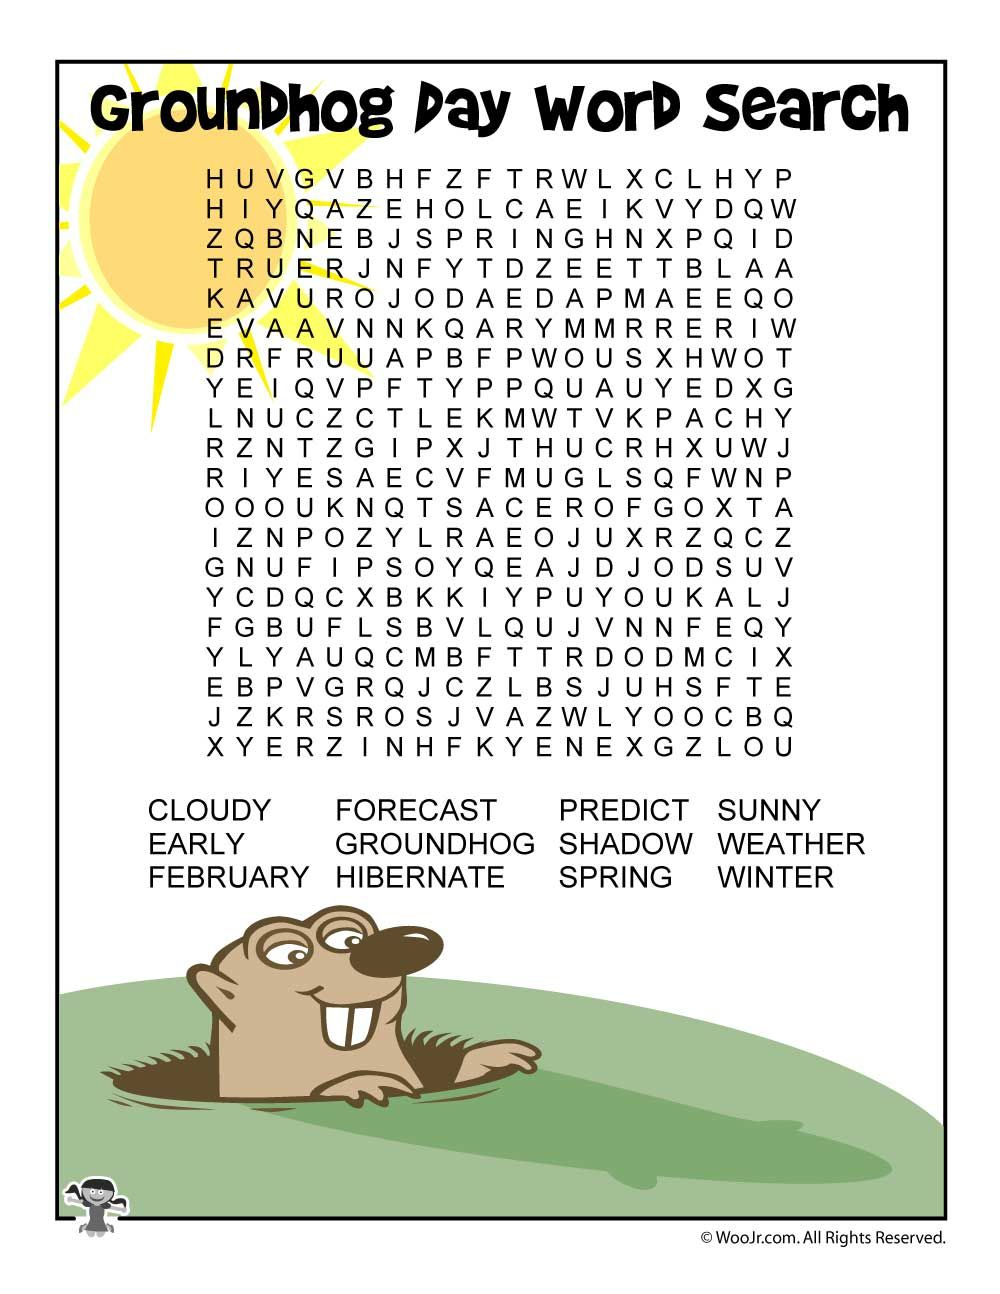 Groundhog Day Word Search | Groundhog Day, Groundhog Day